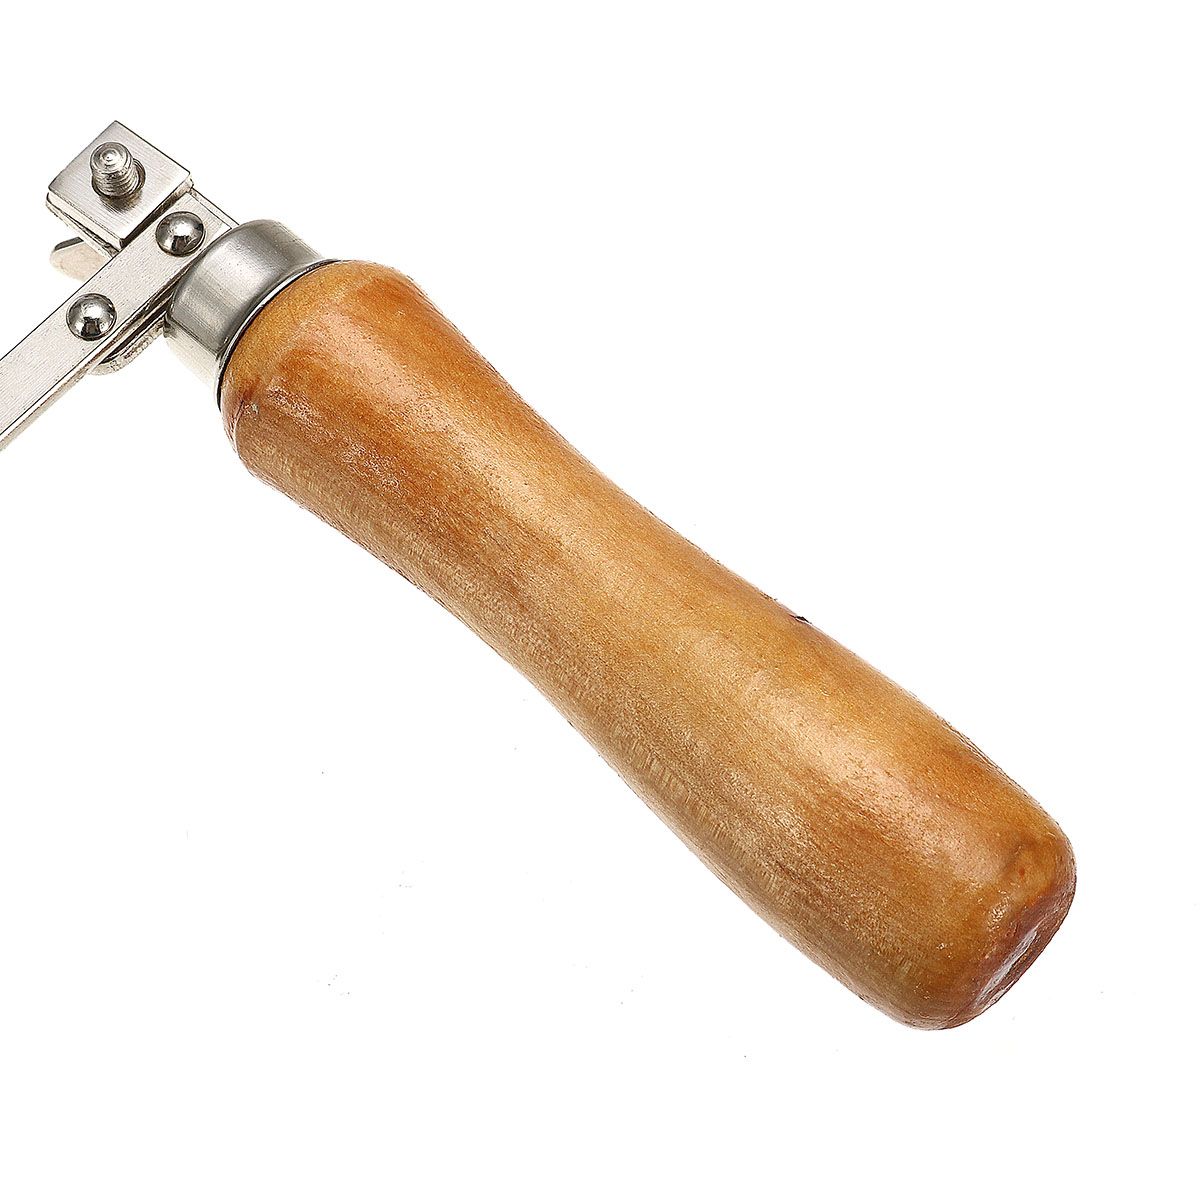 Woodworking-Mini-Saw-Bow-Jewelry-Wire-Carved-U-shaped-Hand-Hacksaw-Handle-Tool-1163340